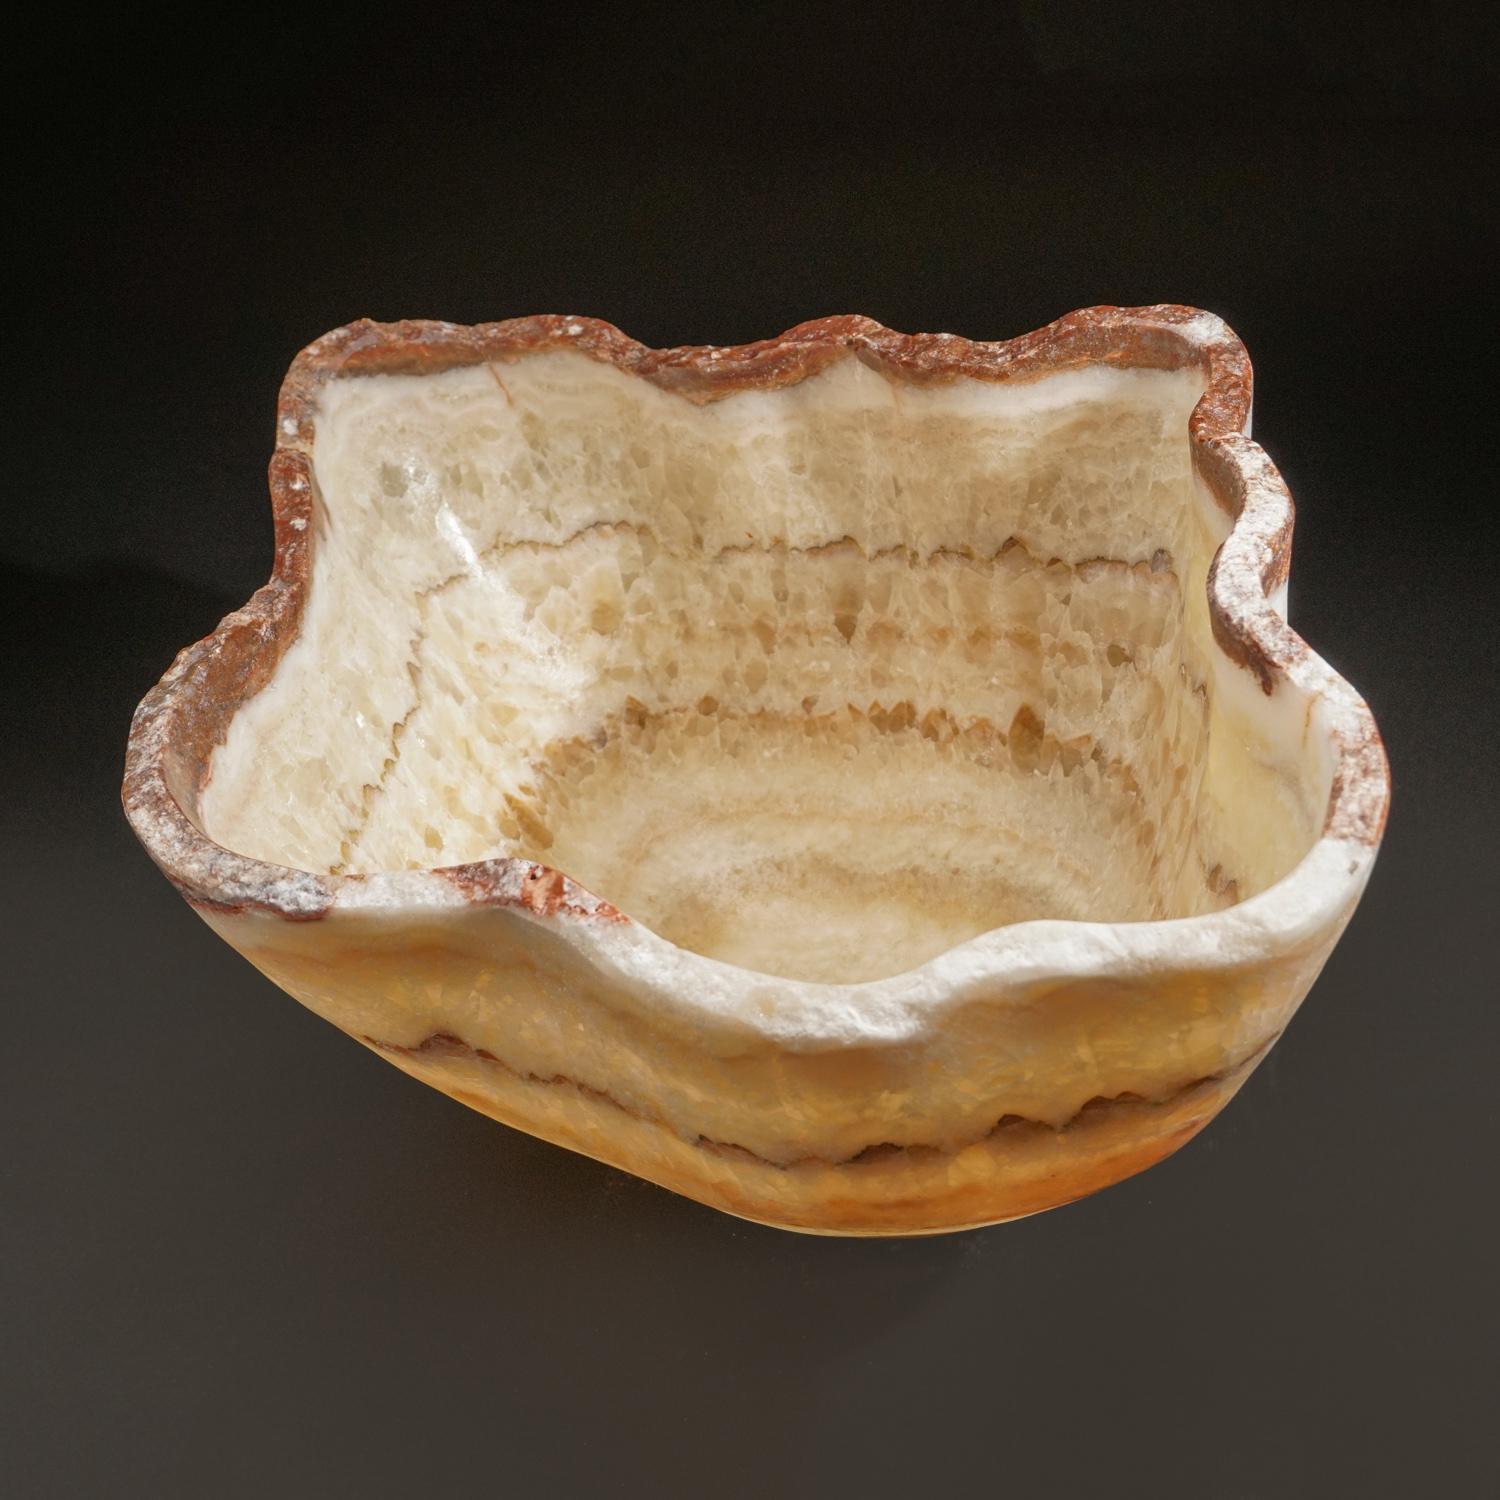 Large Polished Onyx Decorative Bowl from Mexico ( 19.25